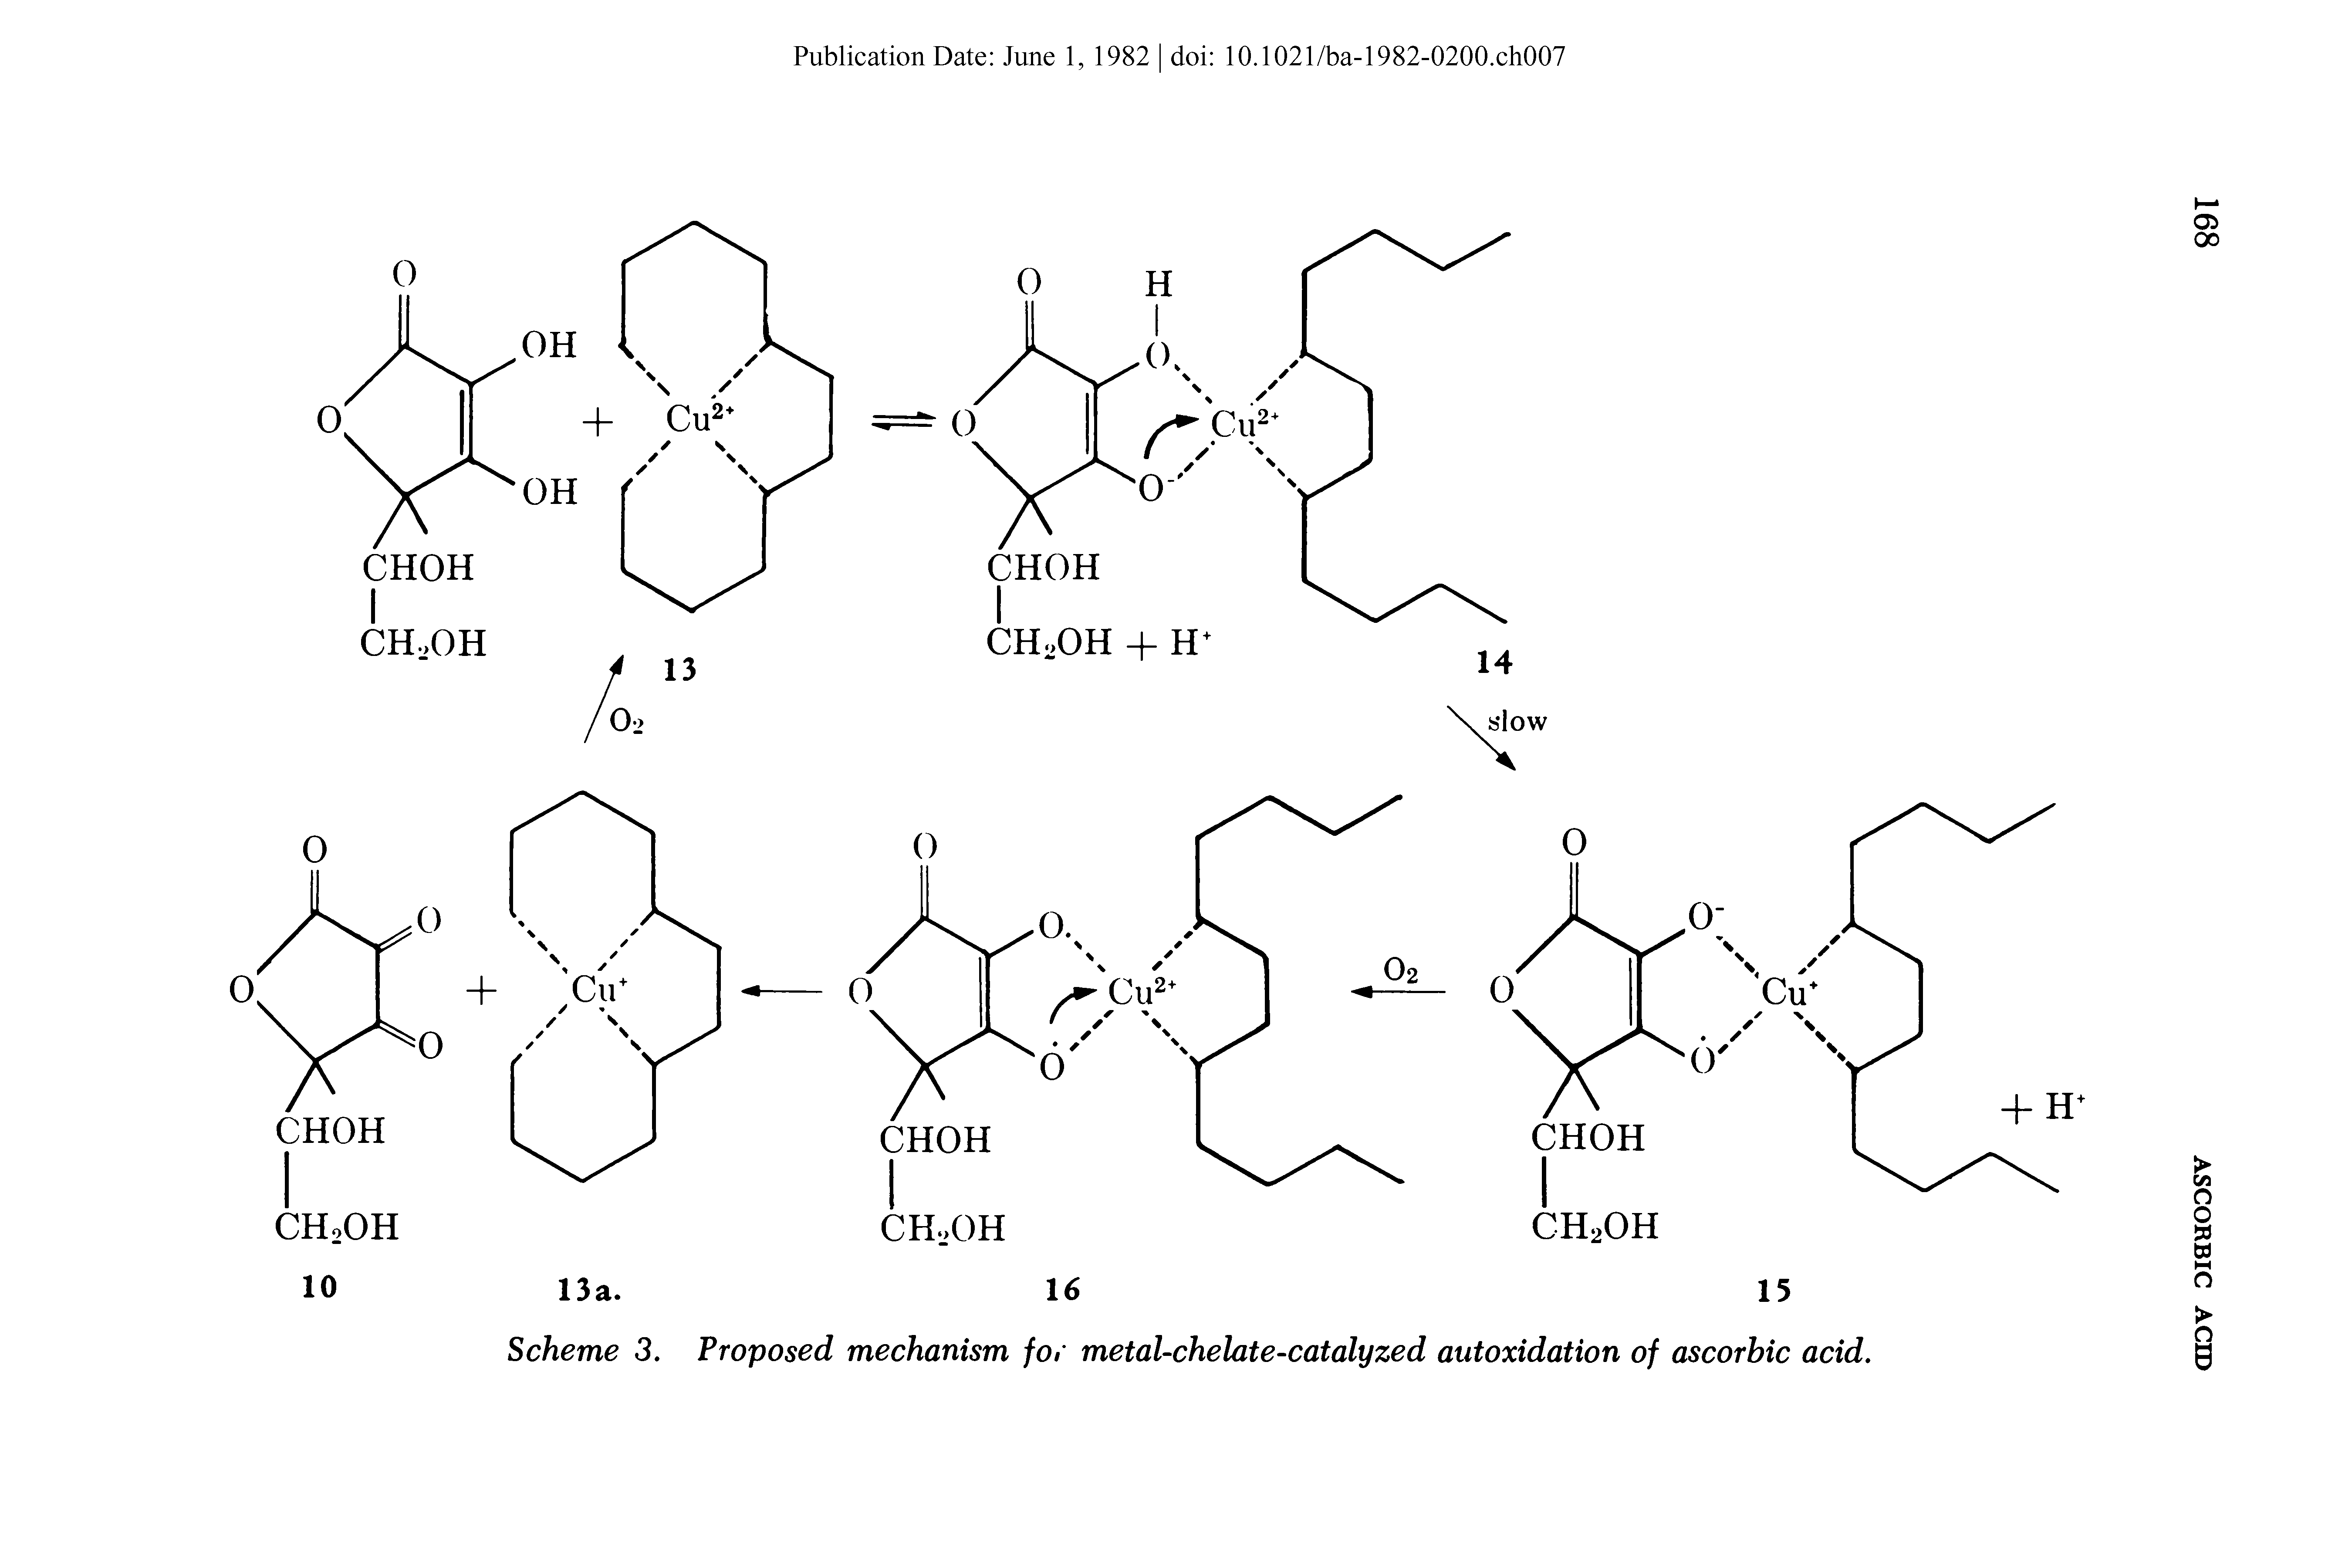 Scheme 3. Proposed mechanism for metal-chelate-catalyzed autoxidation of ascorbic acid.